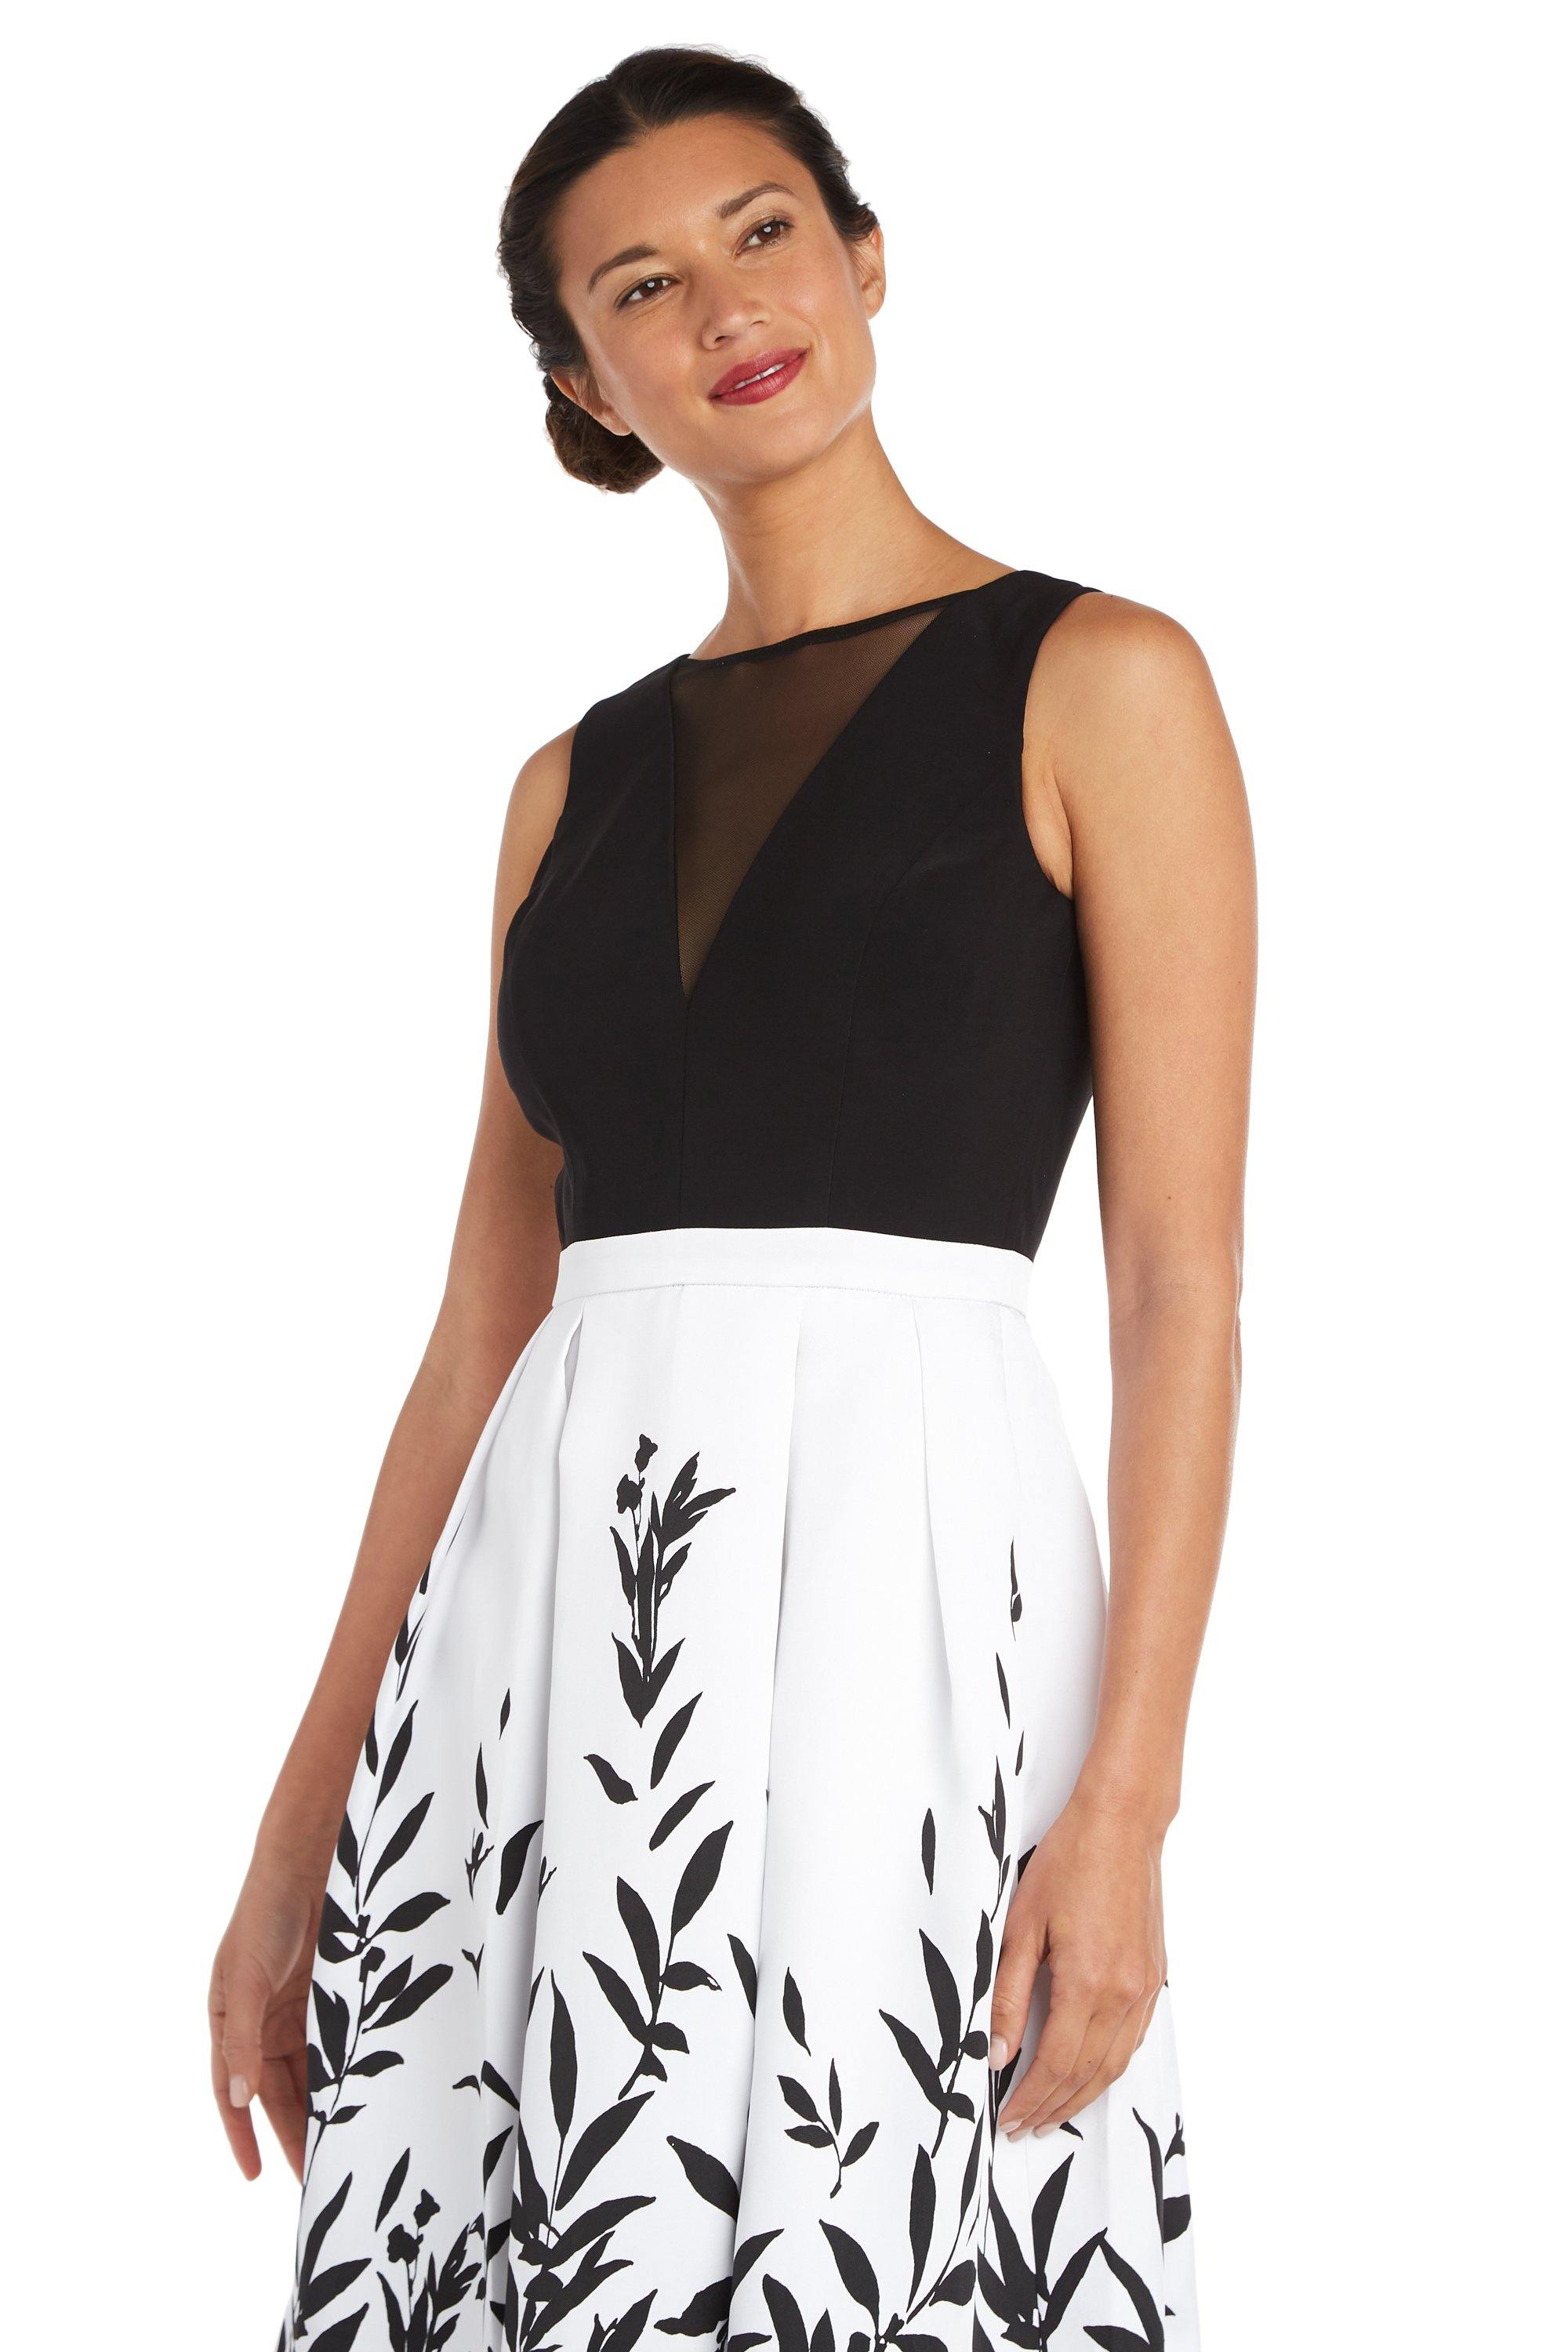 Morgan & Co. Long Printed Skirt Formal Dress 12961 - The Dress Outlet